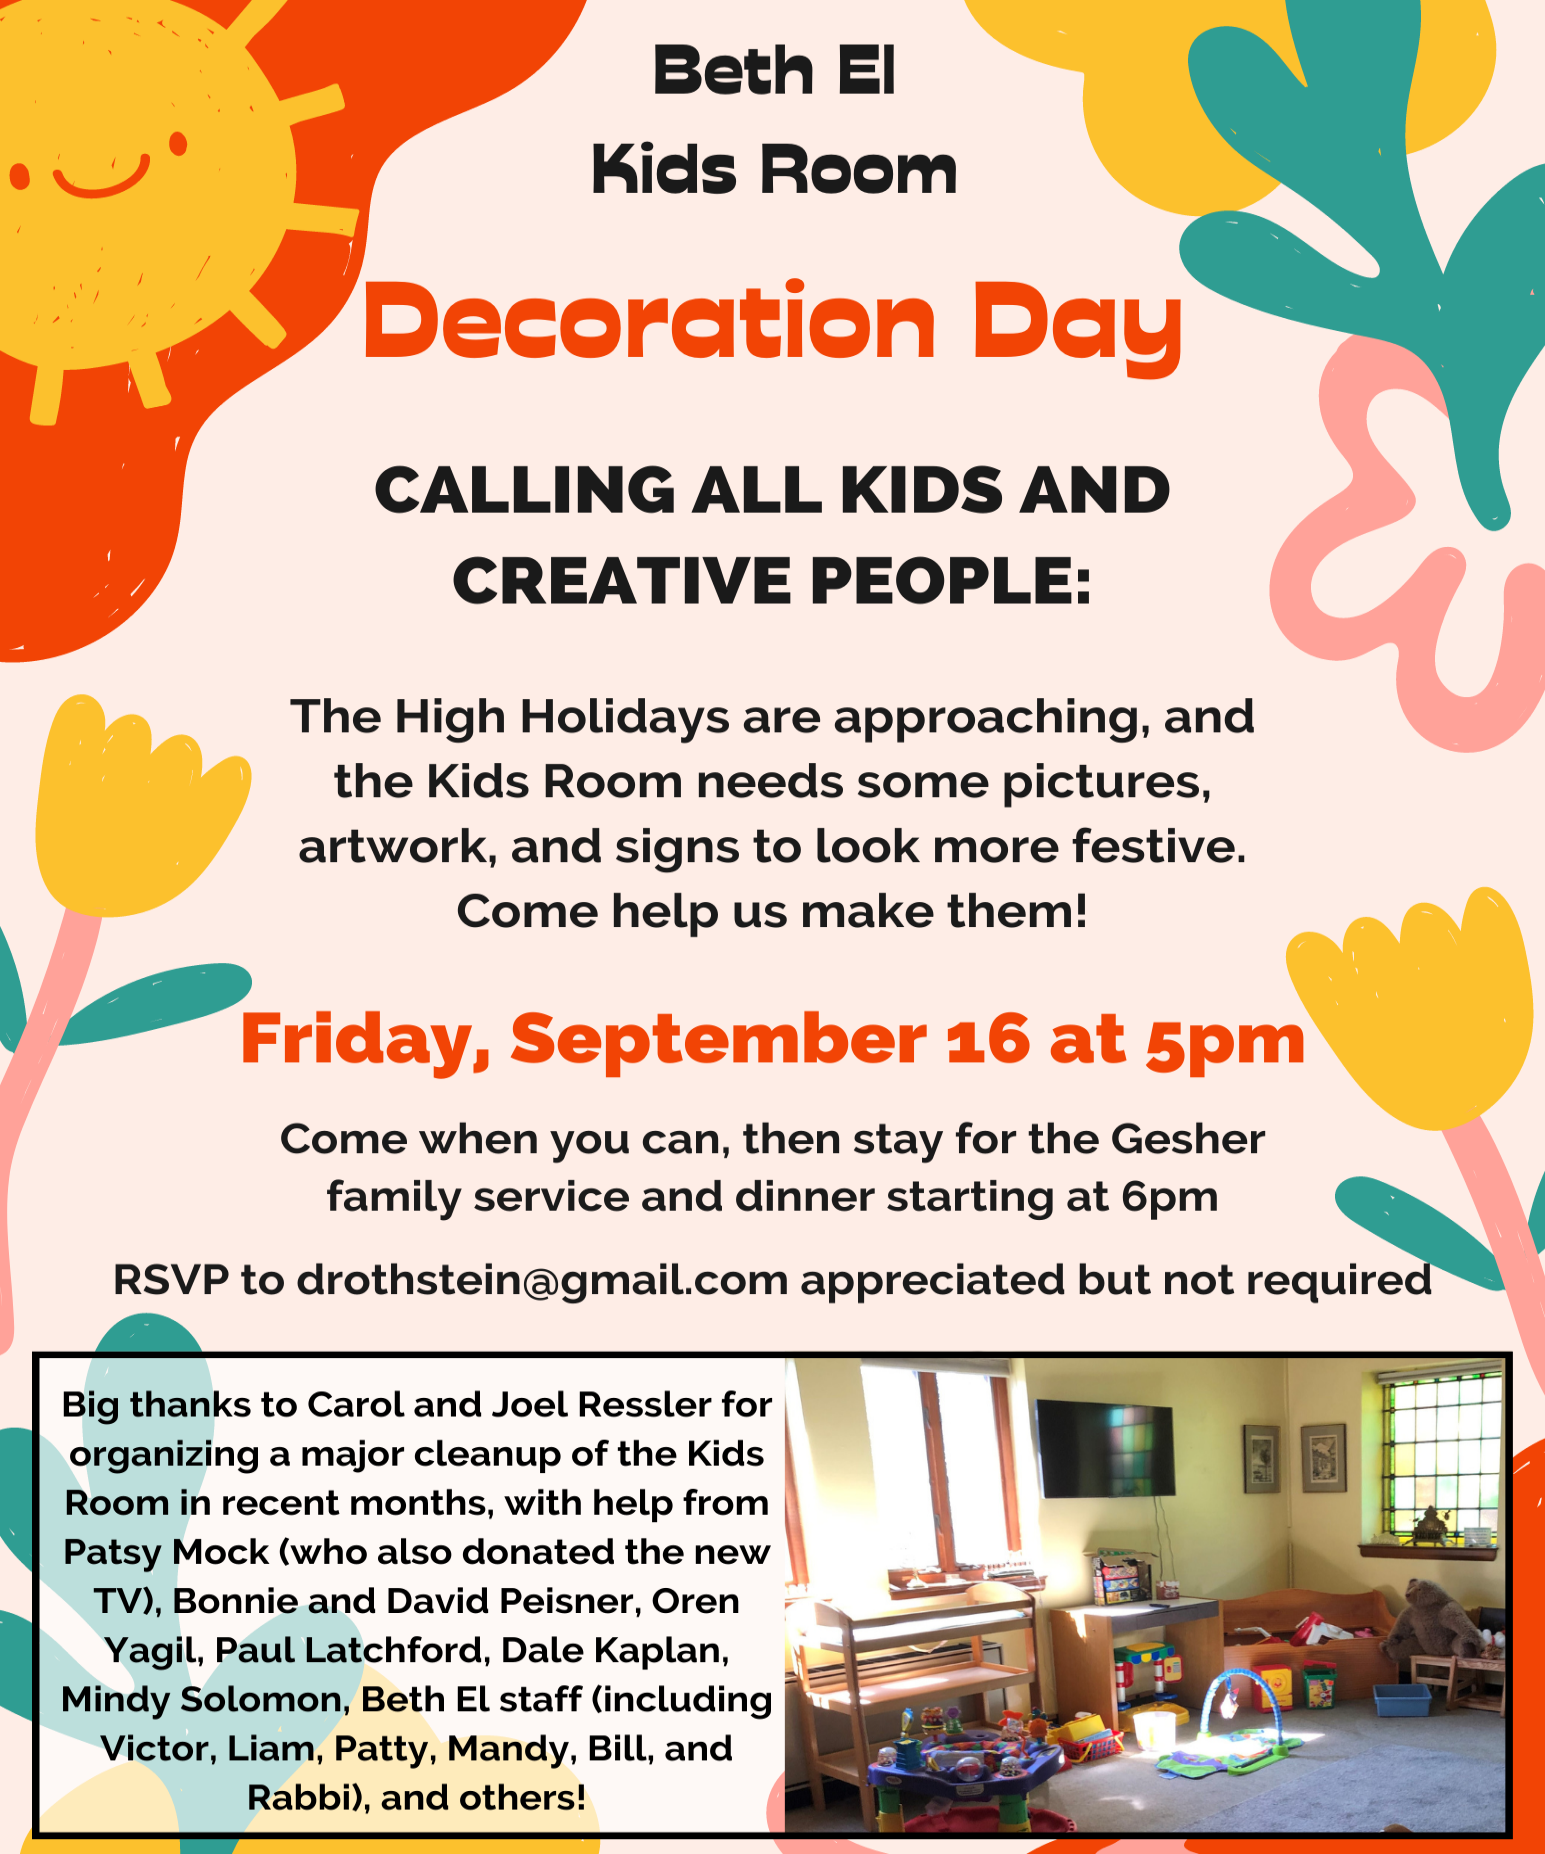 Beth El Kids Room Decoration Day